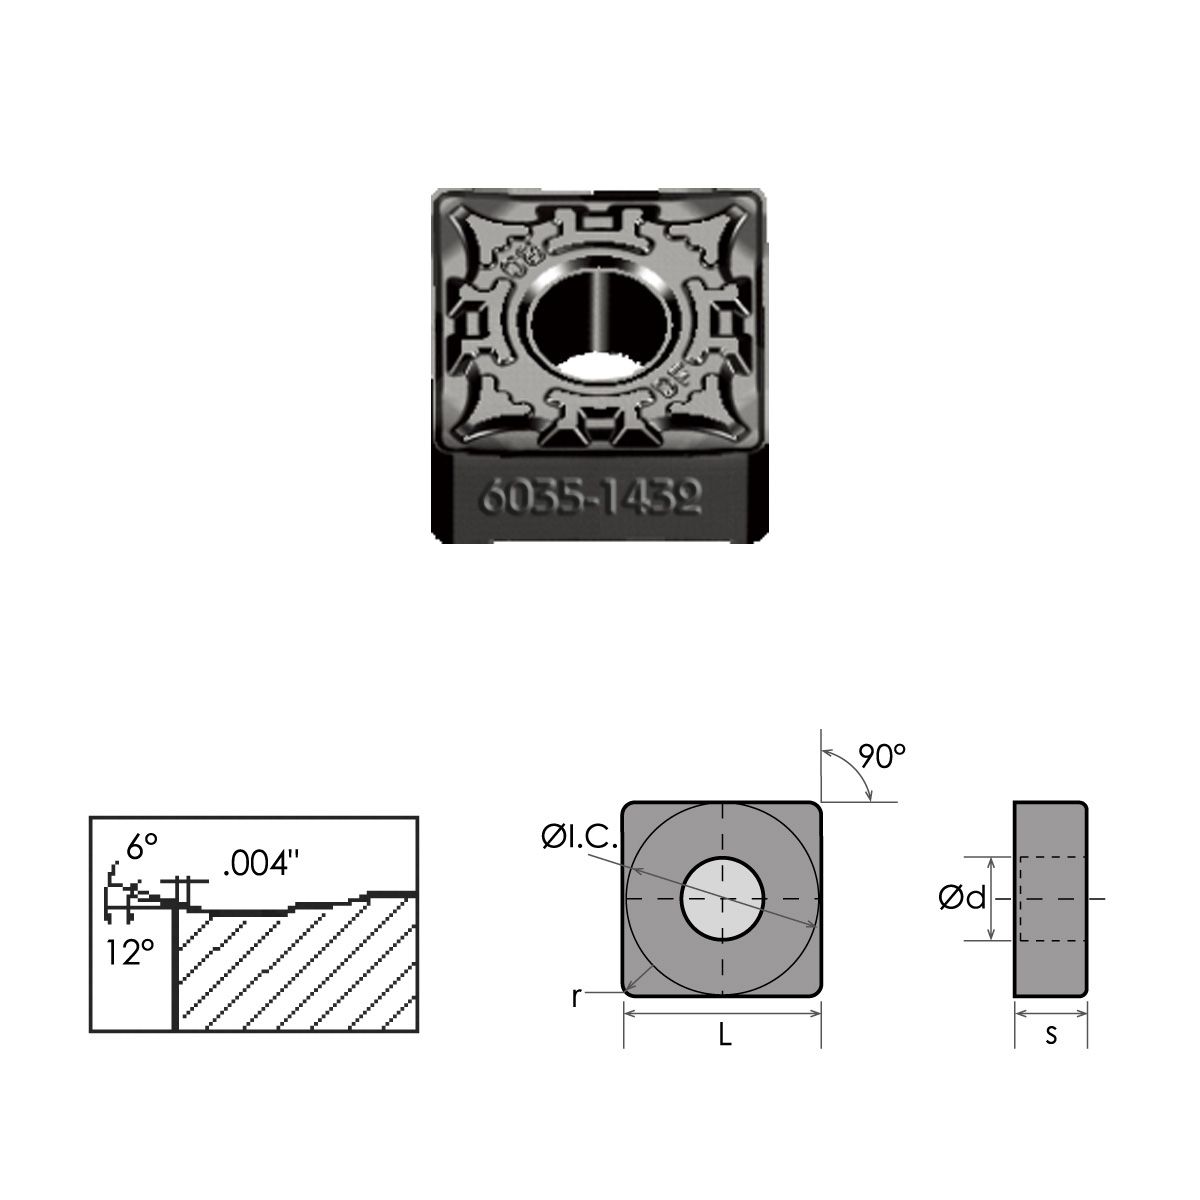 SNMG-433-DF BLACK DIAMOND COATED CARBIDE INSERT (6035-1433)